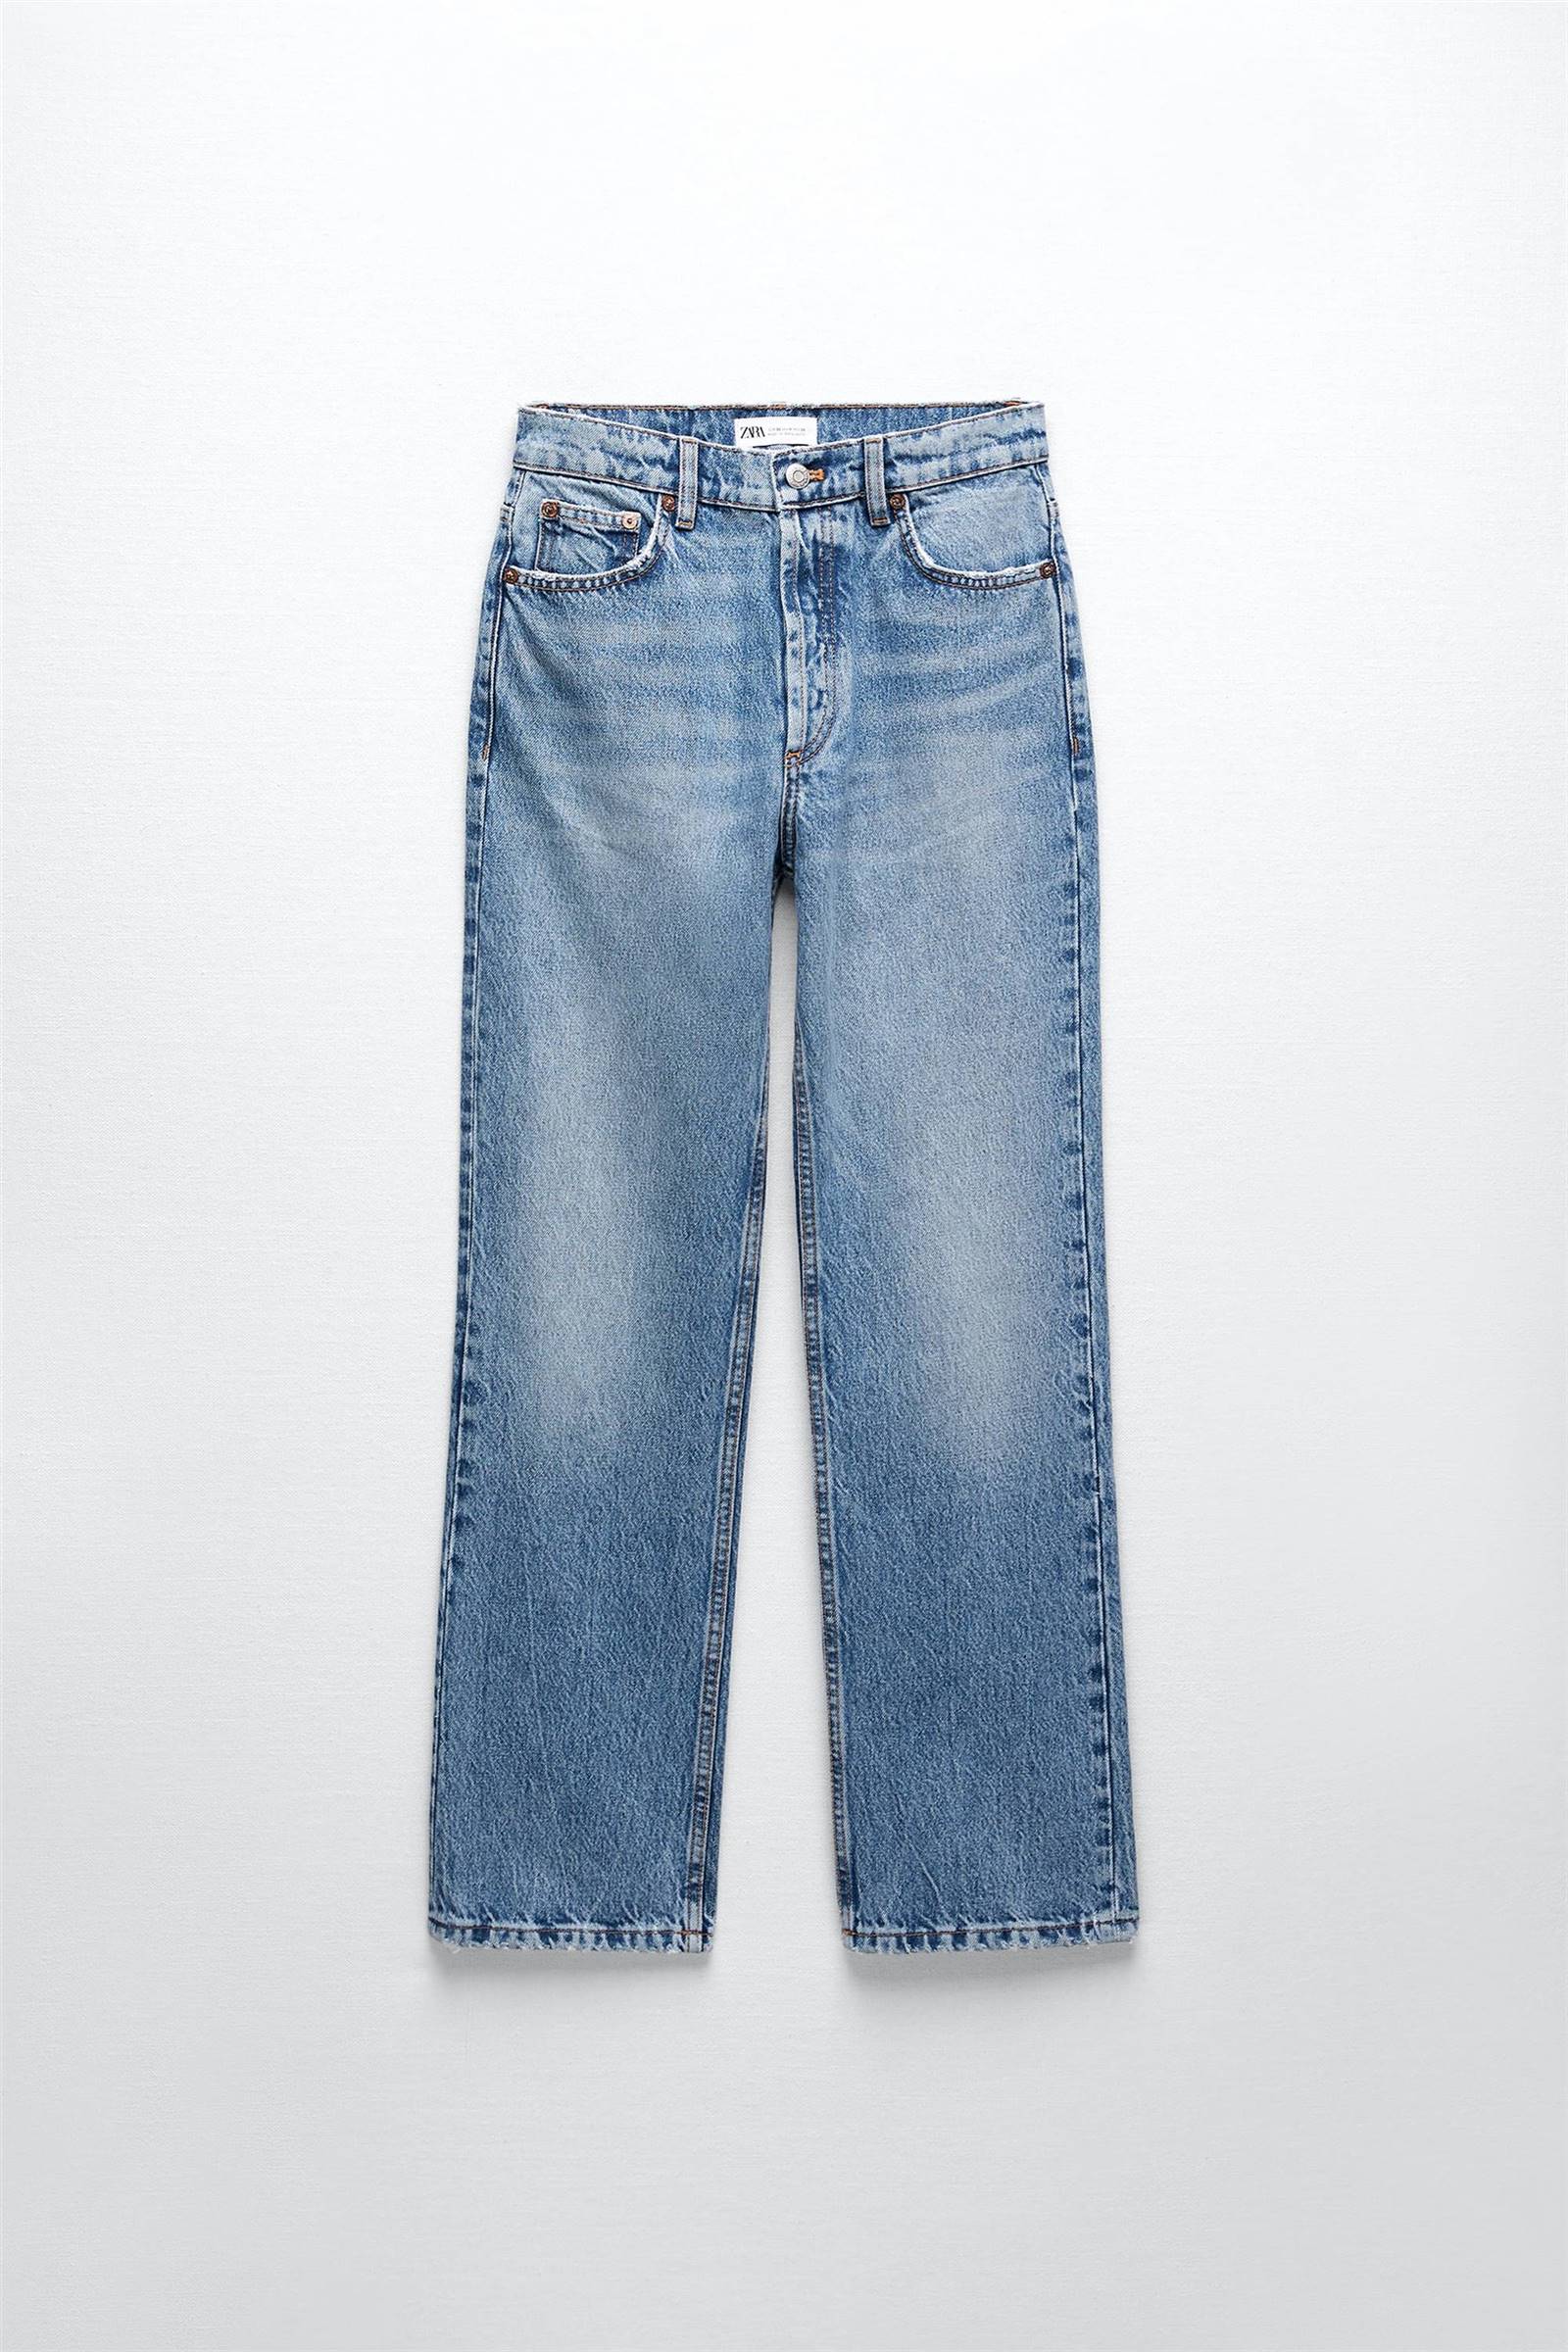 Jeans rectos de Zara